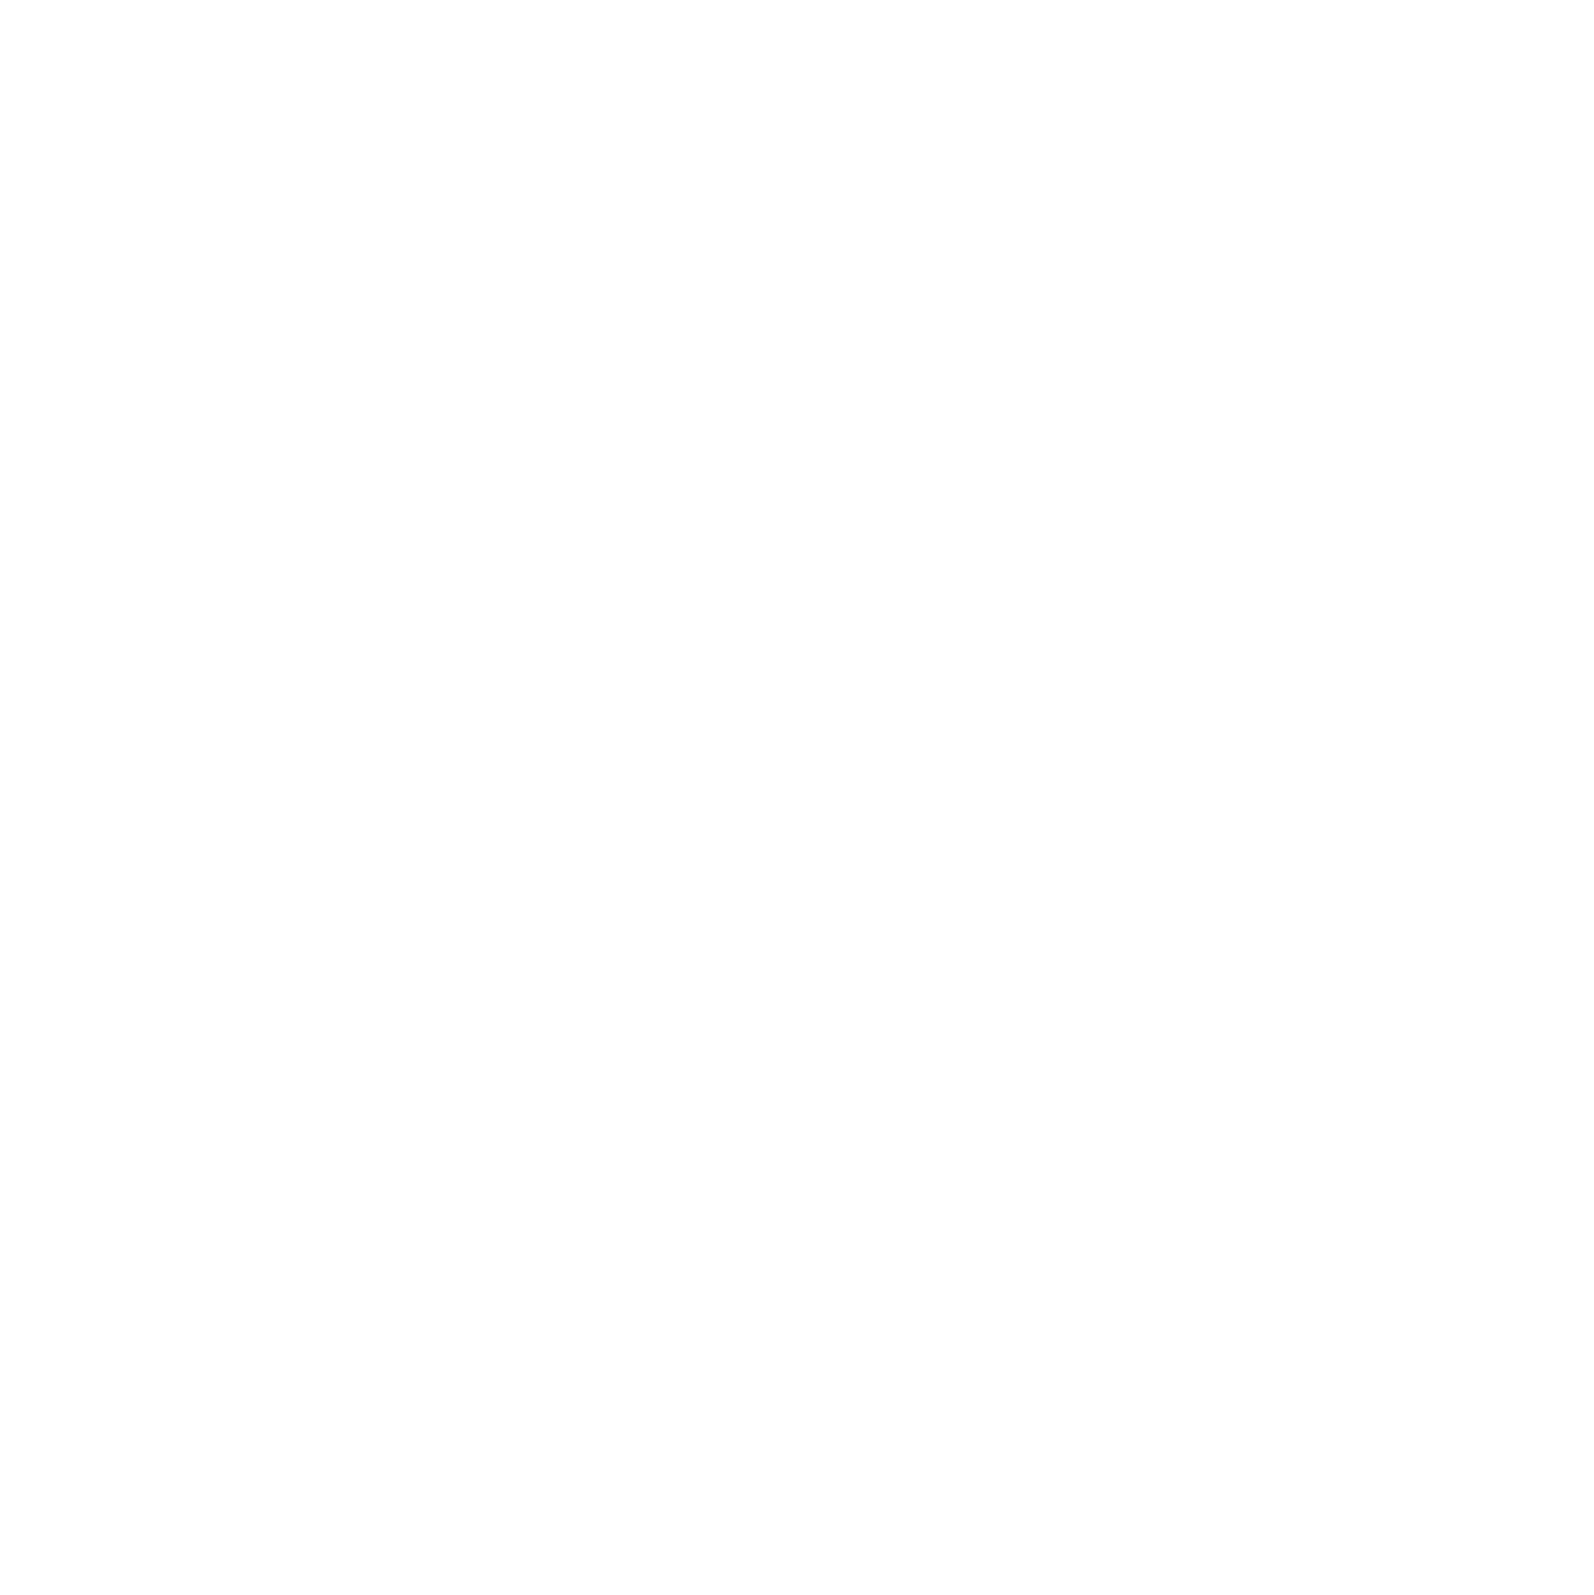 Okta logo pour fonds sombres (PNG transparent)